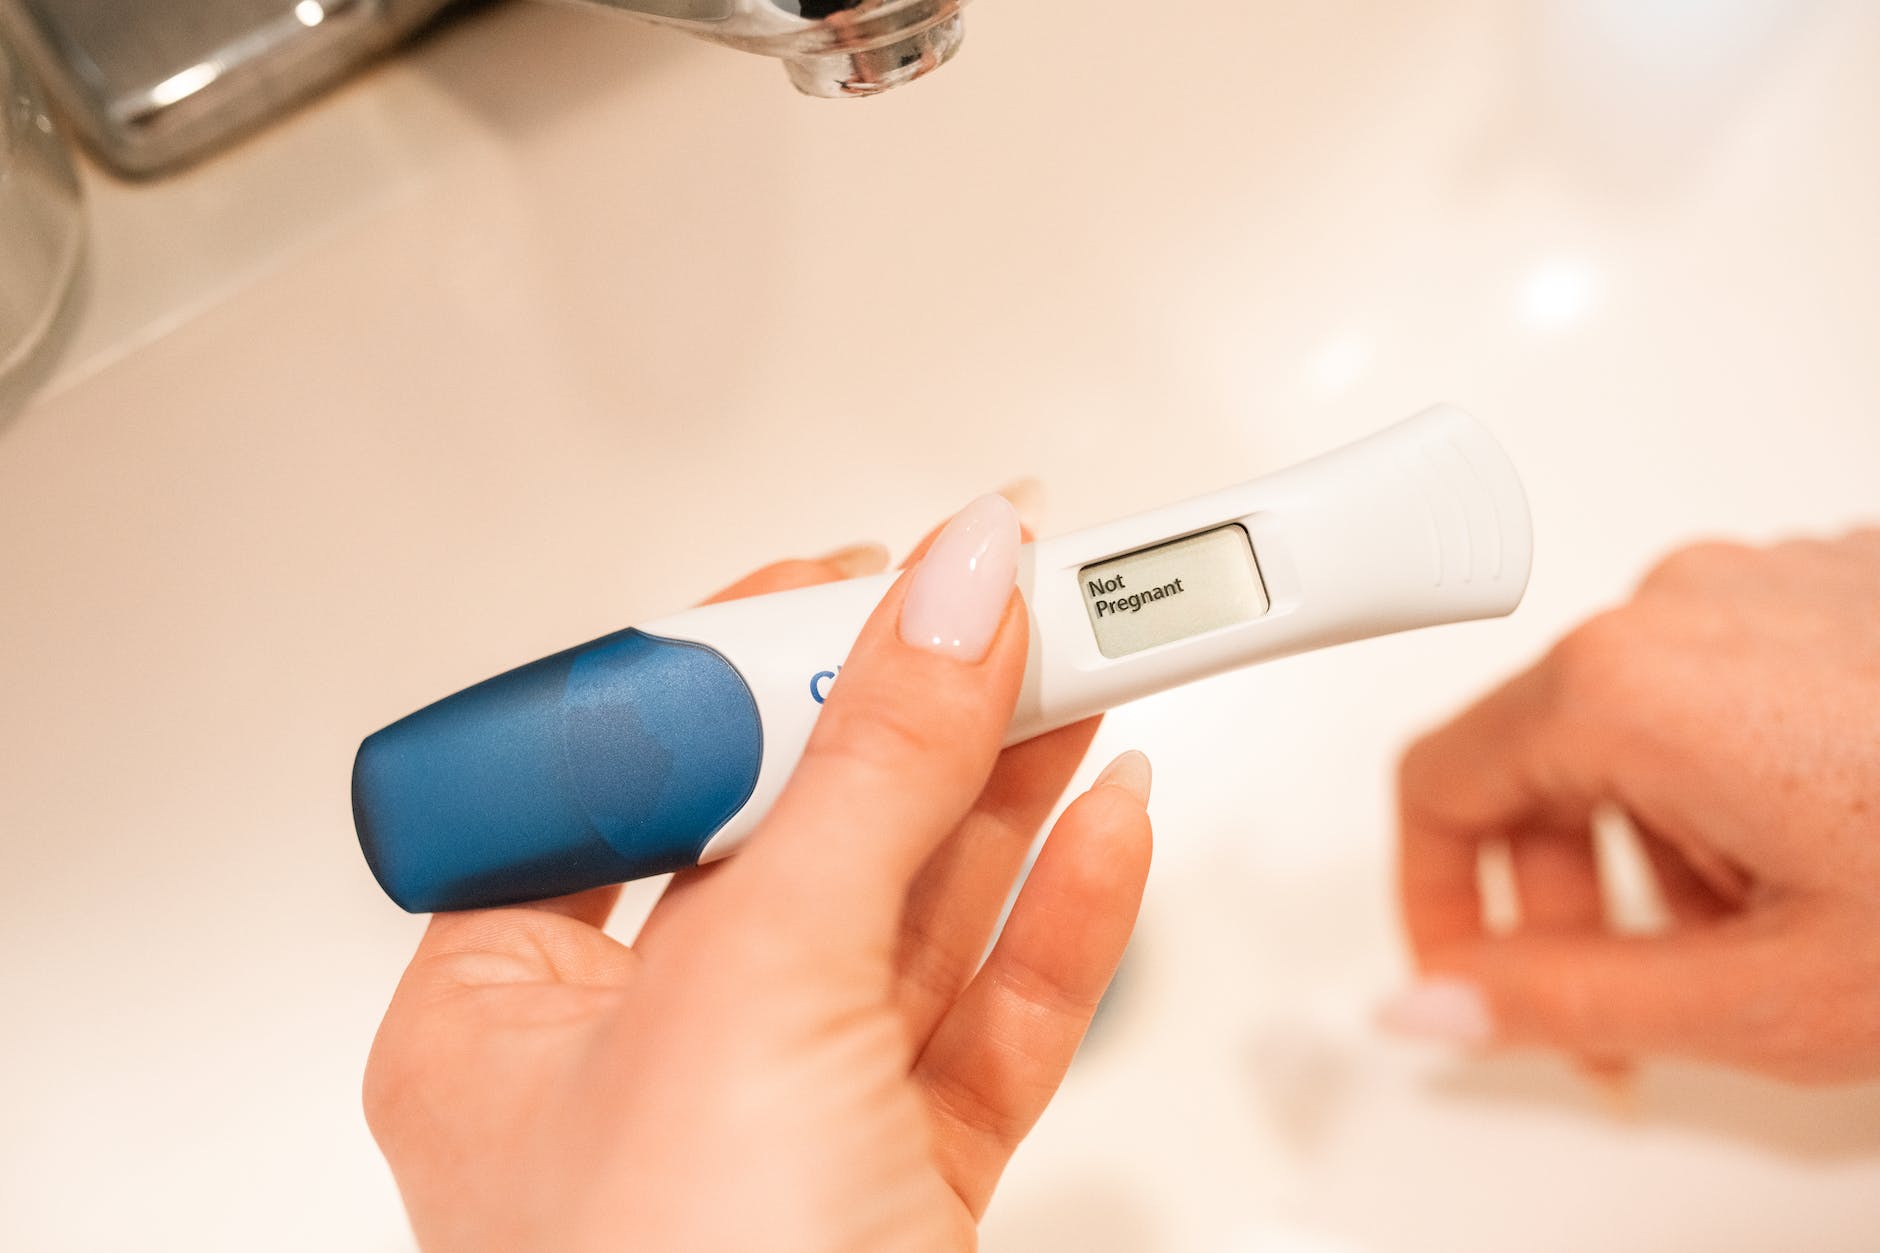 white and blue pregnancy test kit